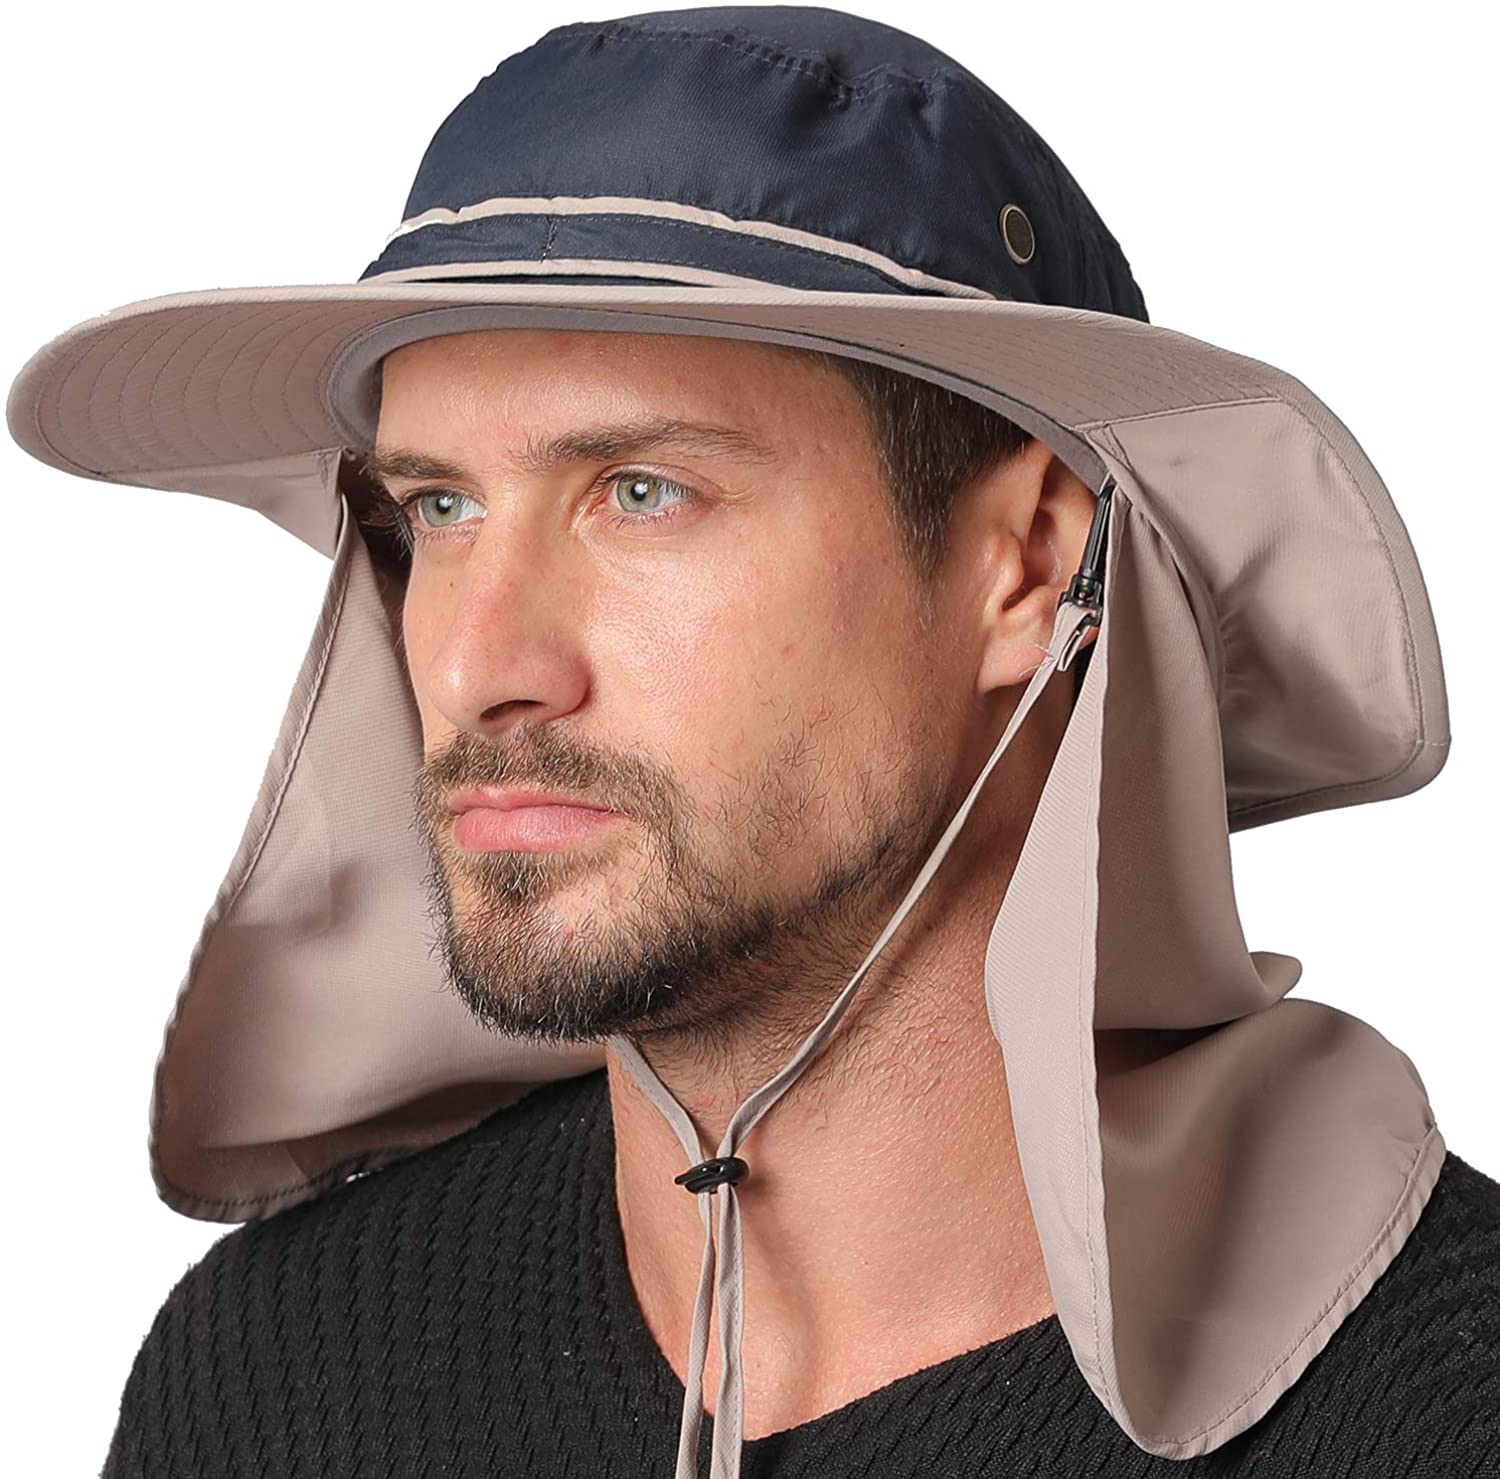 JORMATT Unisex Sun Hat with Neck Flap Cover Fishing Safari Cap Neck Protection,UPF 50+ 